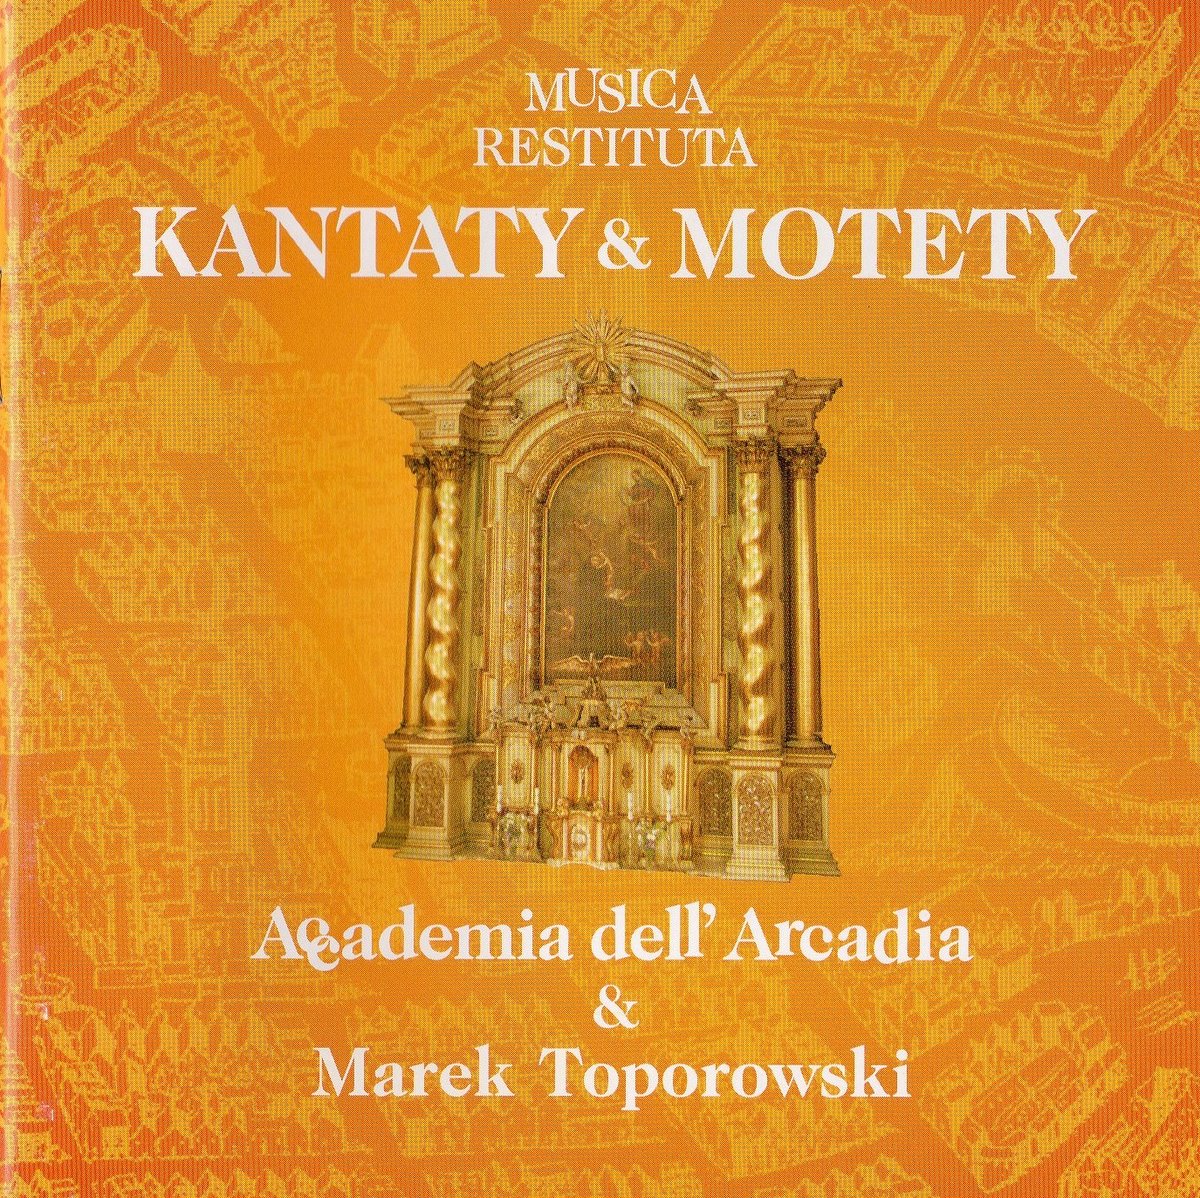 Accademia dell'Arcadia - Musica Restituta III "Kantaty & Motety"